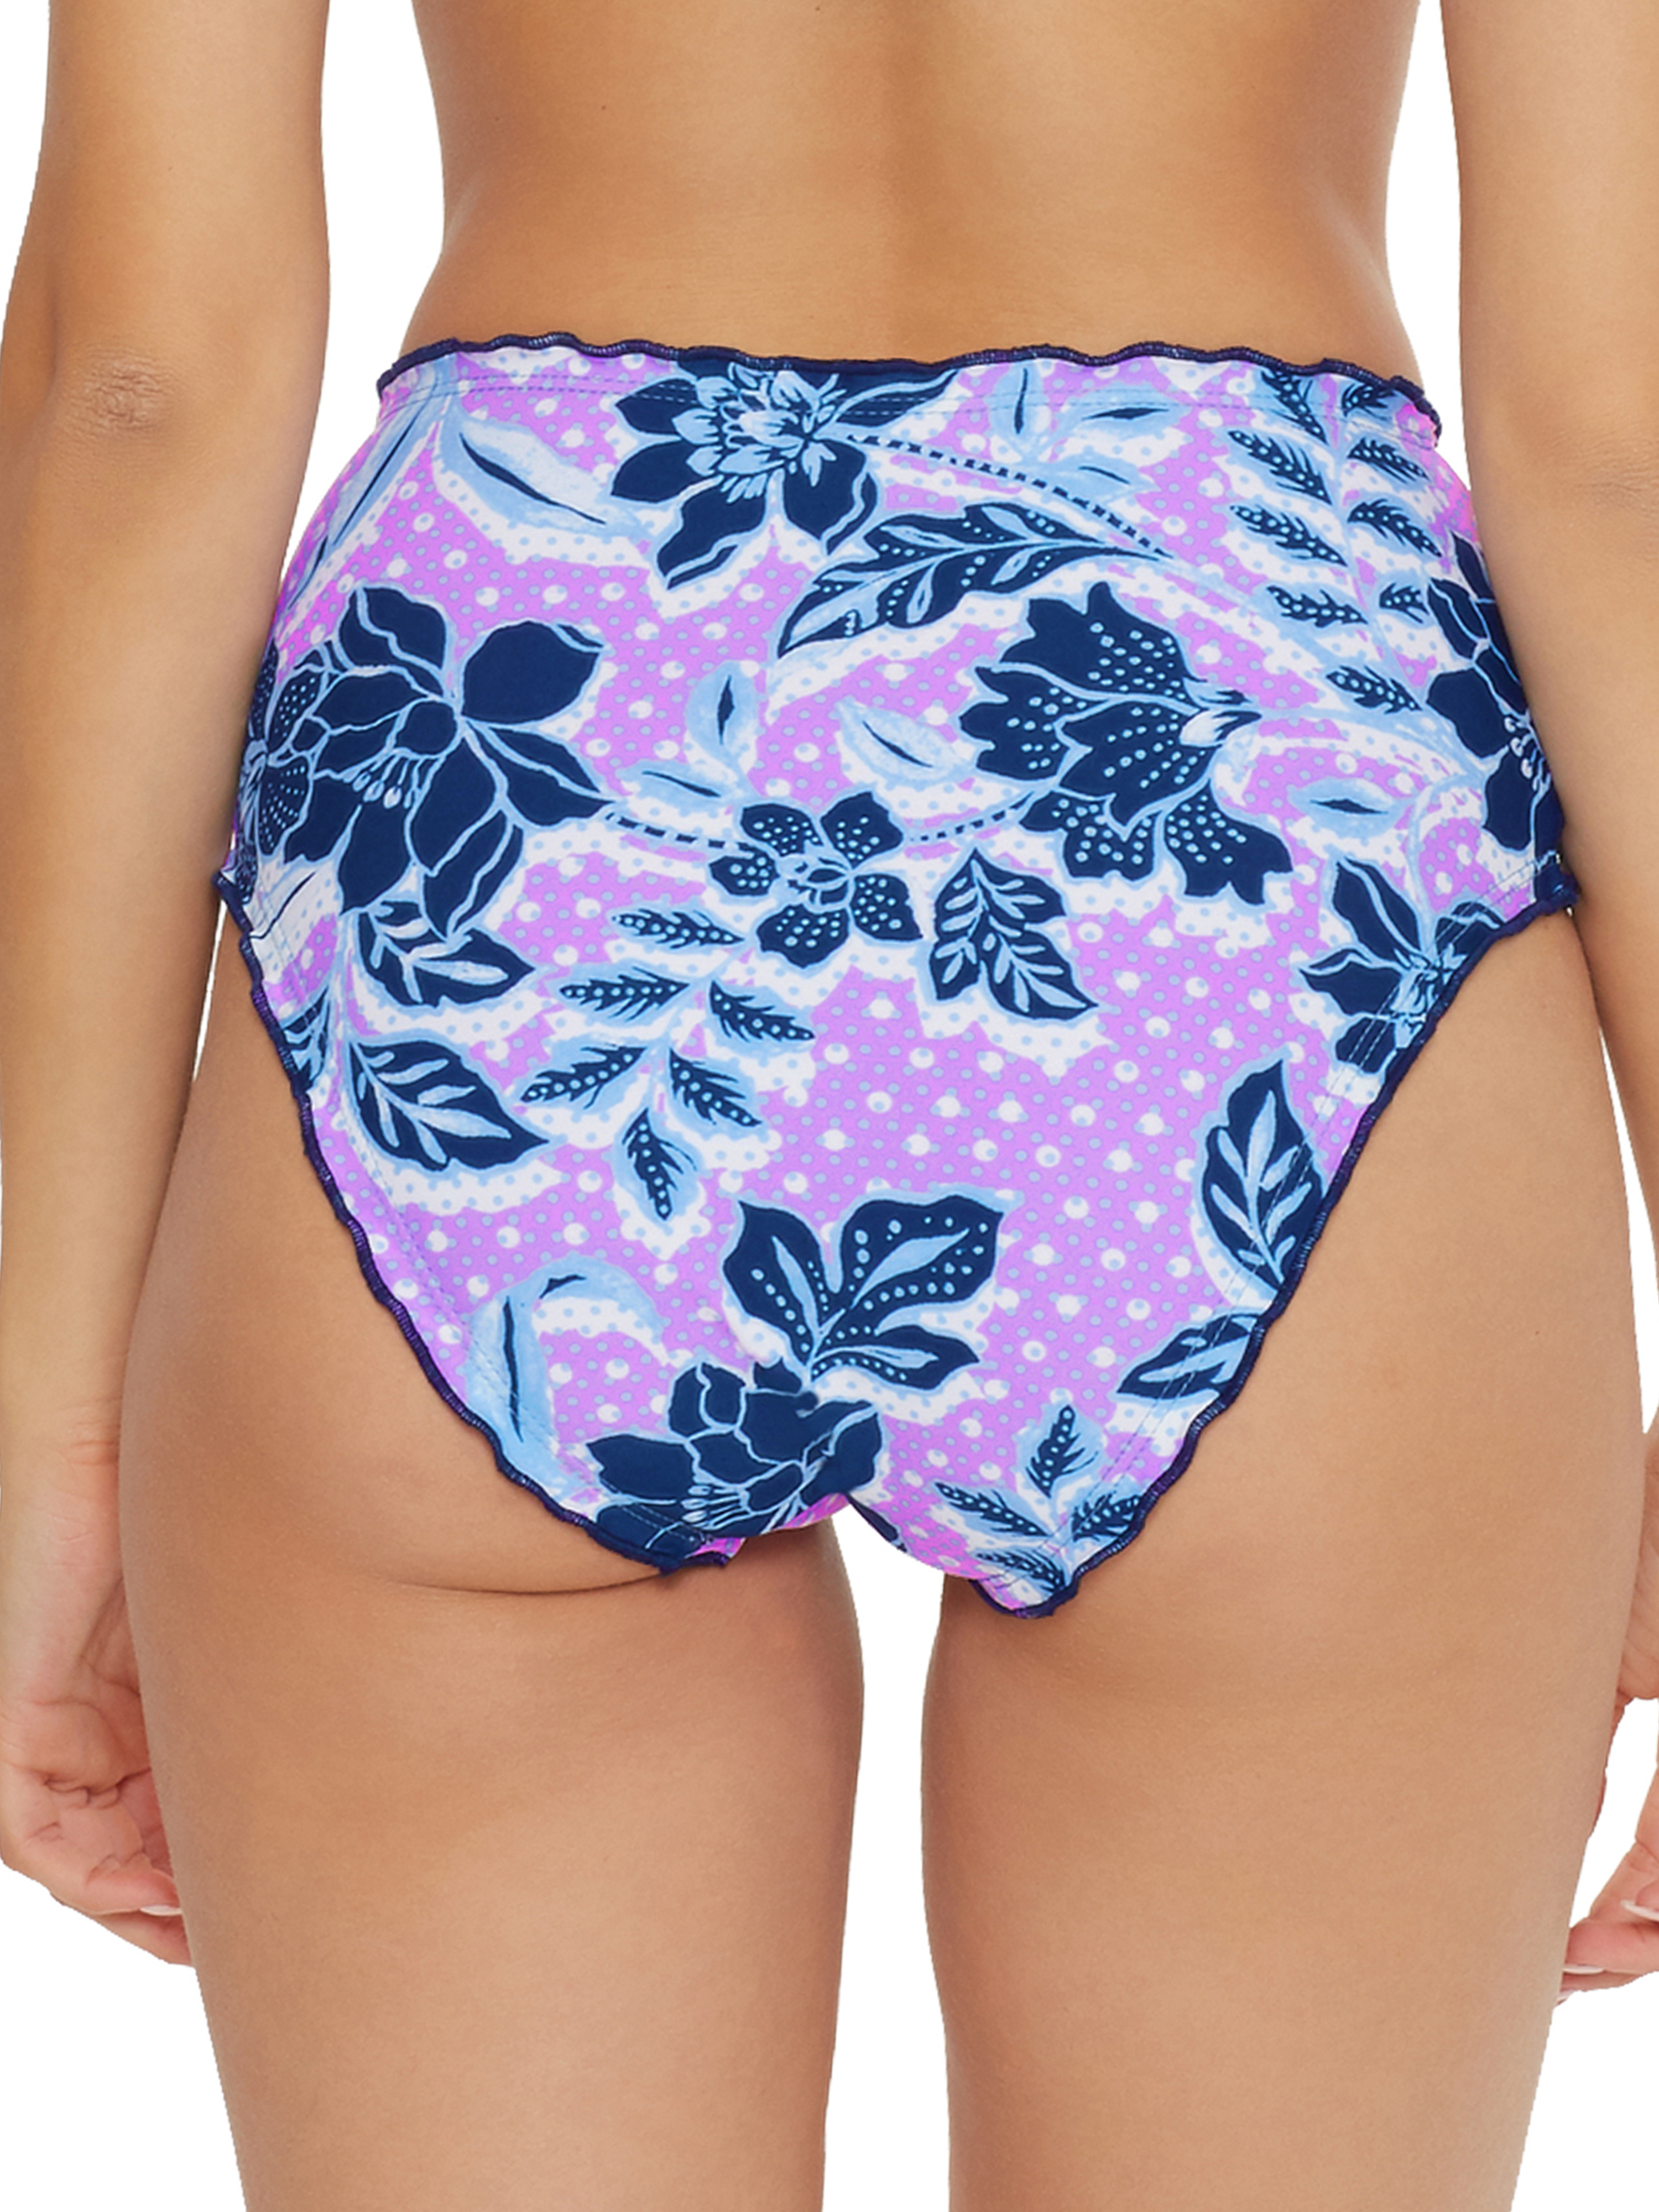 Women's Floral Dot High Waist Bikini Bottom - image 3 of 9